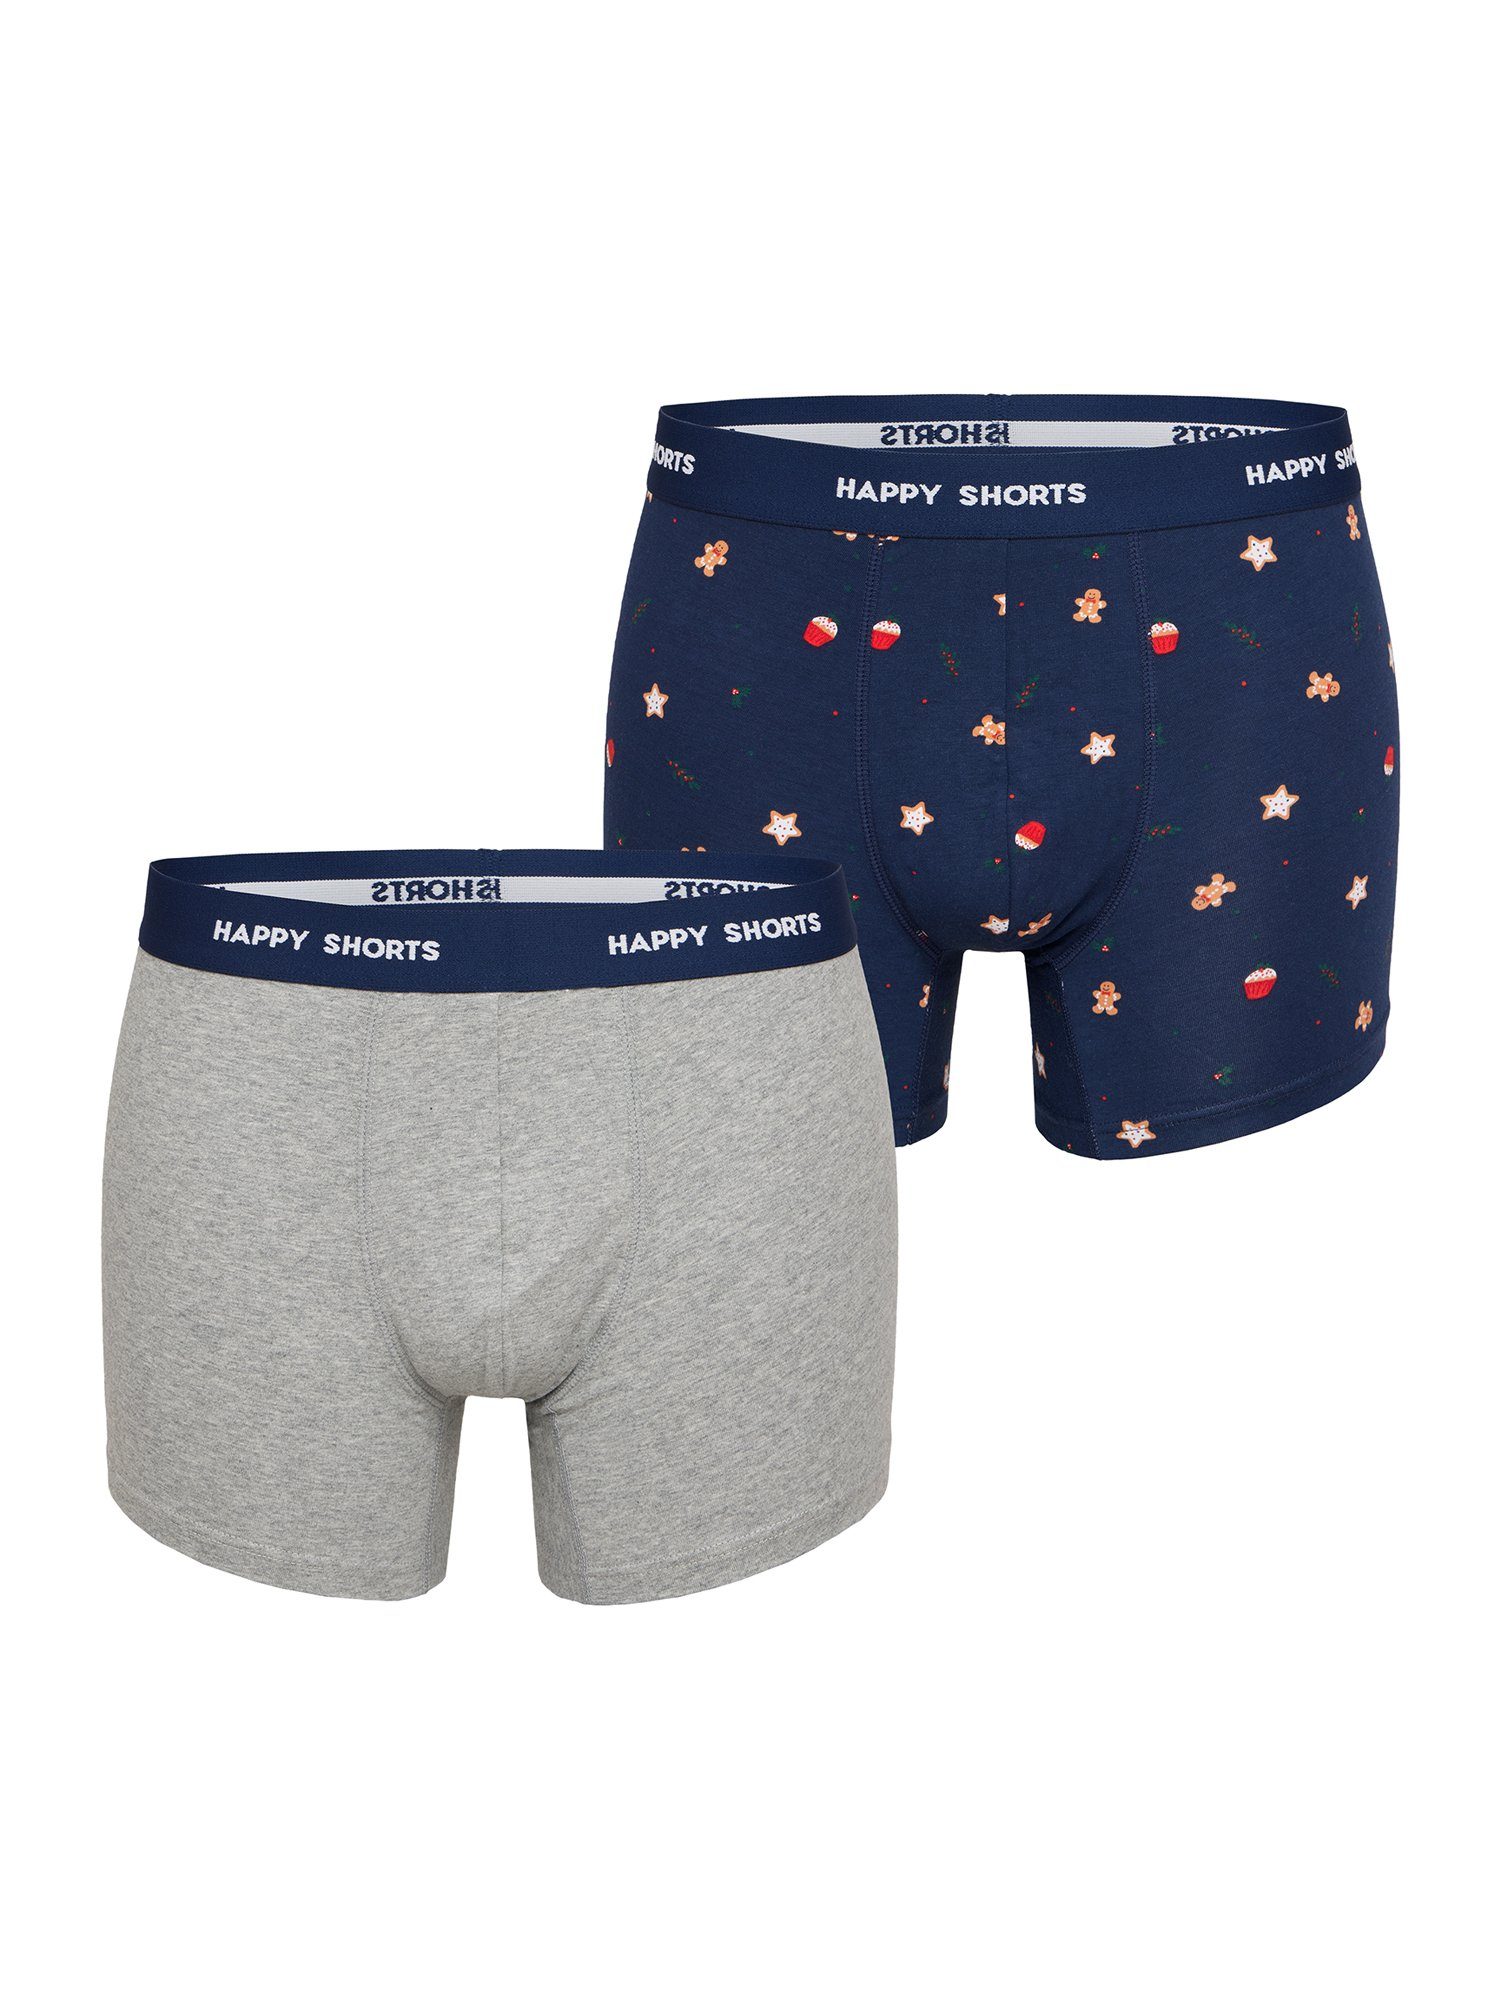 HAPPY SHORTS Retro Pants XMAS (2-St) Retro-Boxer Retro-shorts unterhose Cookies